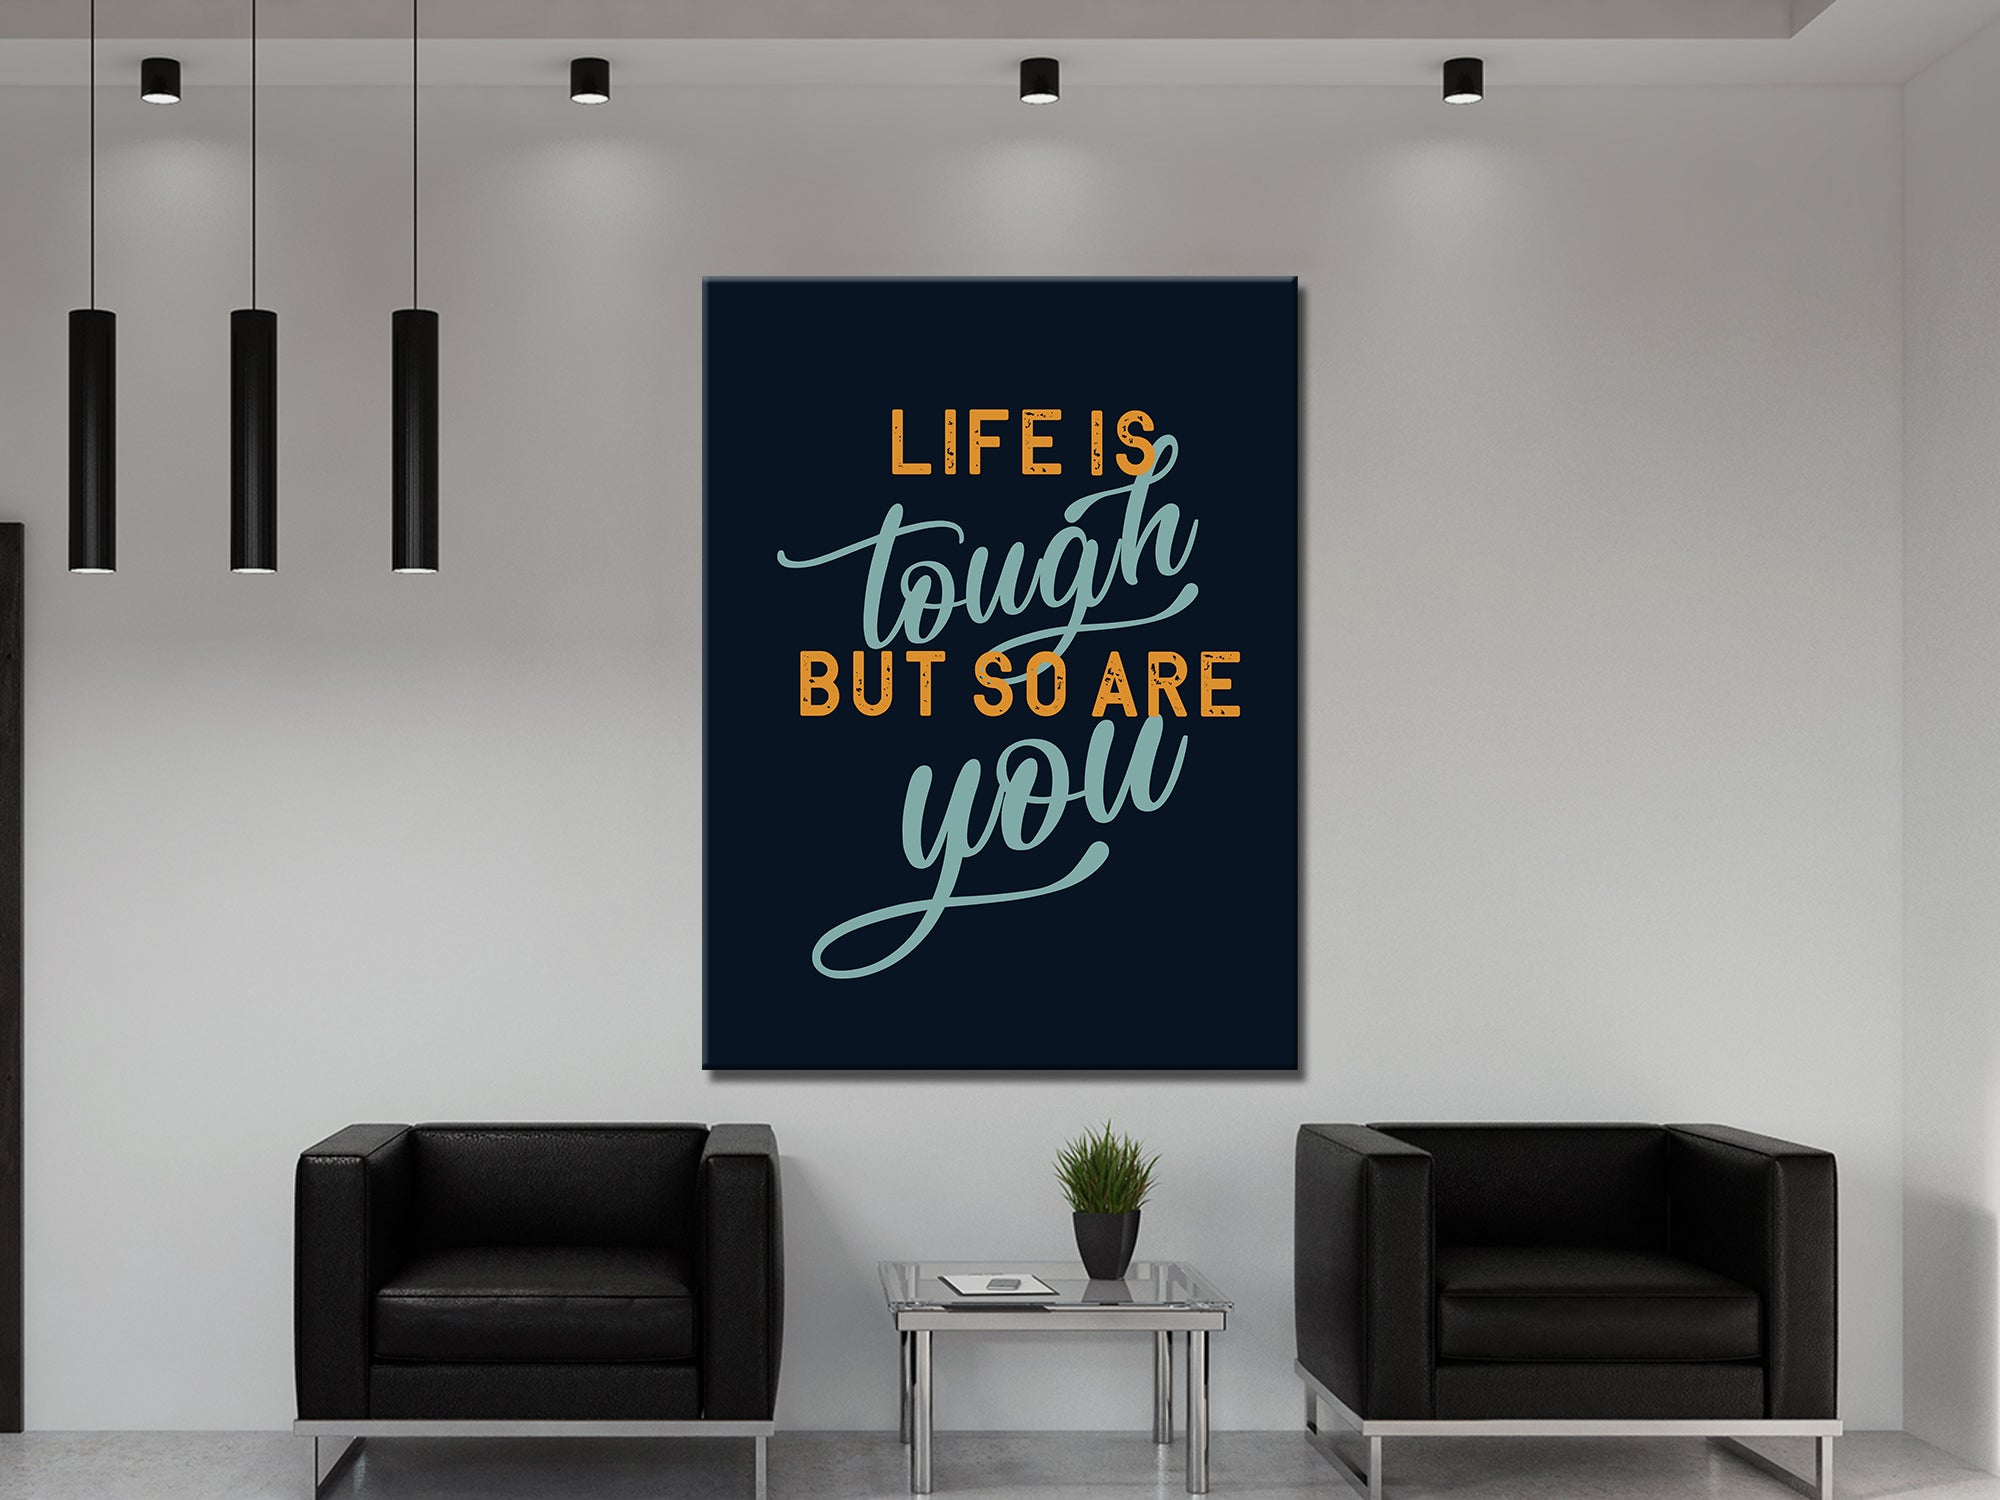 You are Tough - Inspiring - Living Room Canvas Wall Art